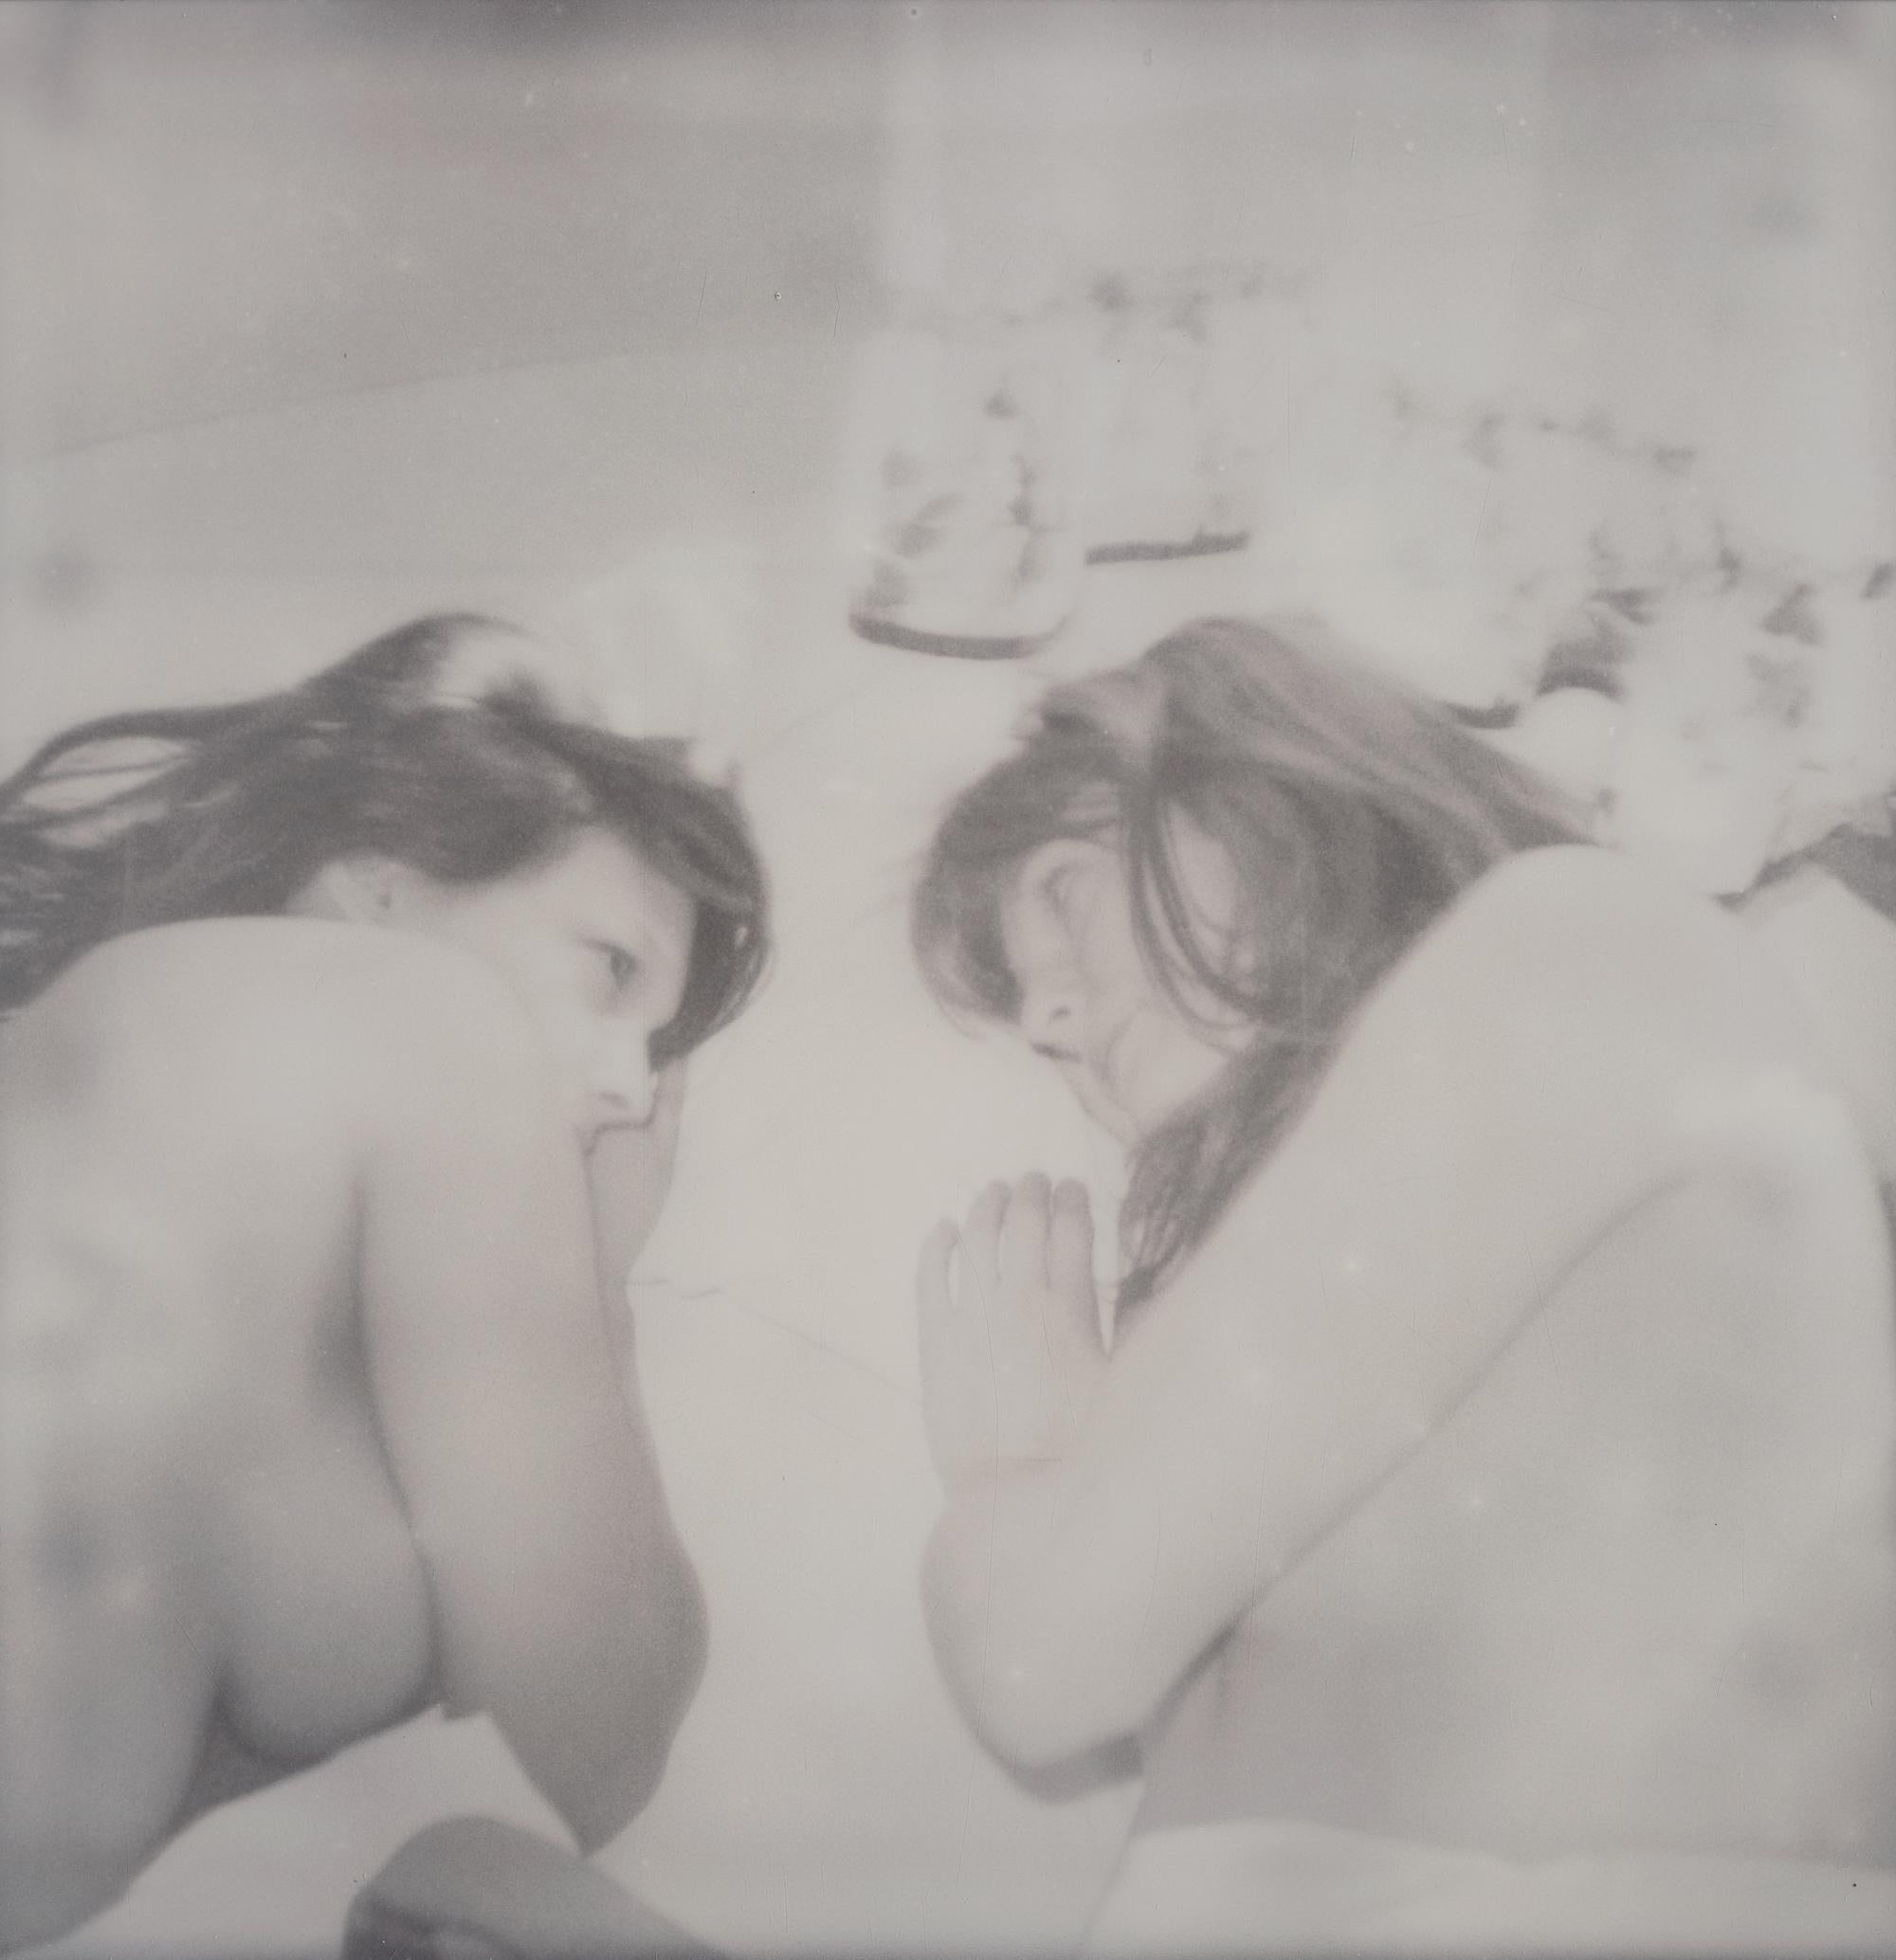 Black and White Photograph Stefanie Schneider - Together (Till Death do us Part) - Contemporain, Polaroid